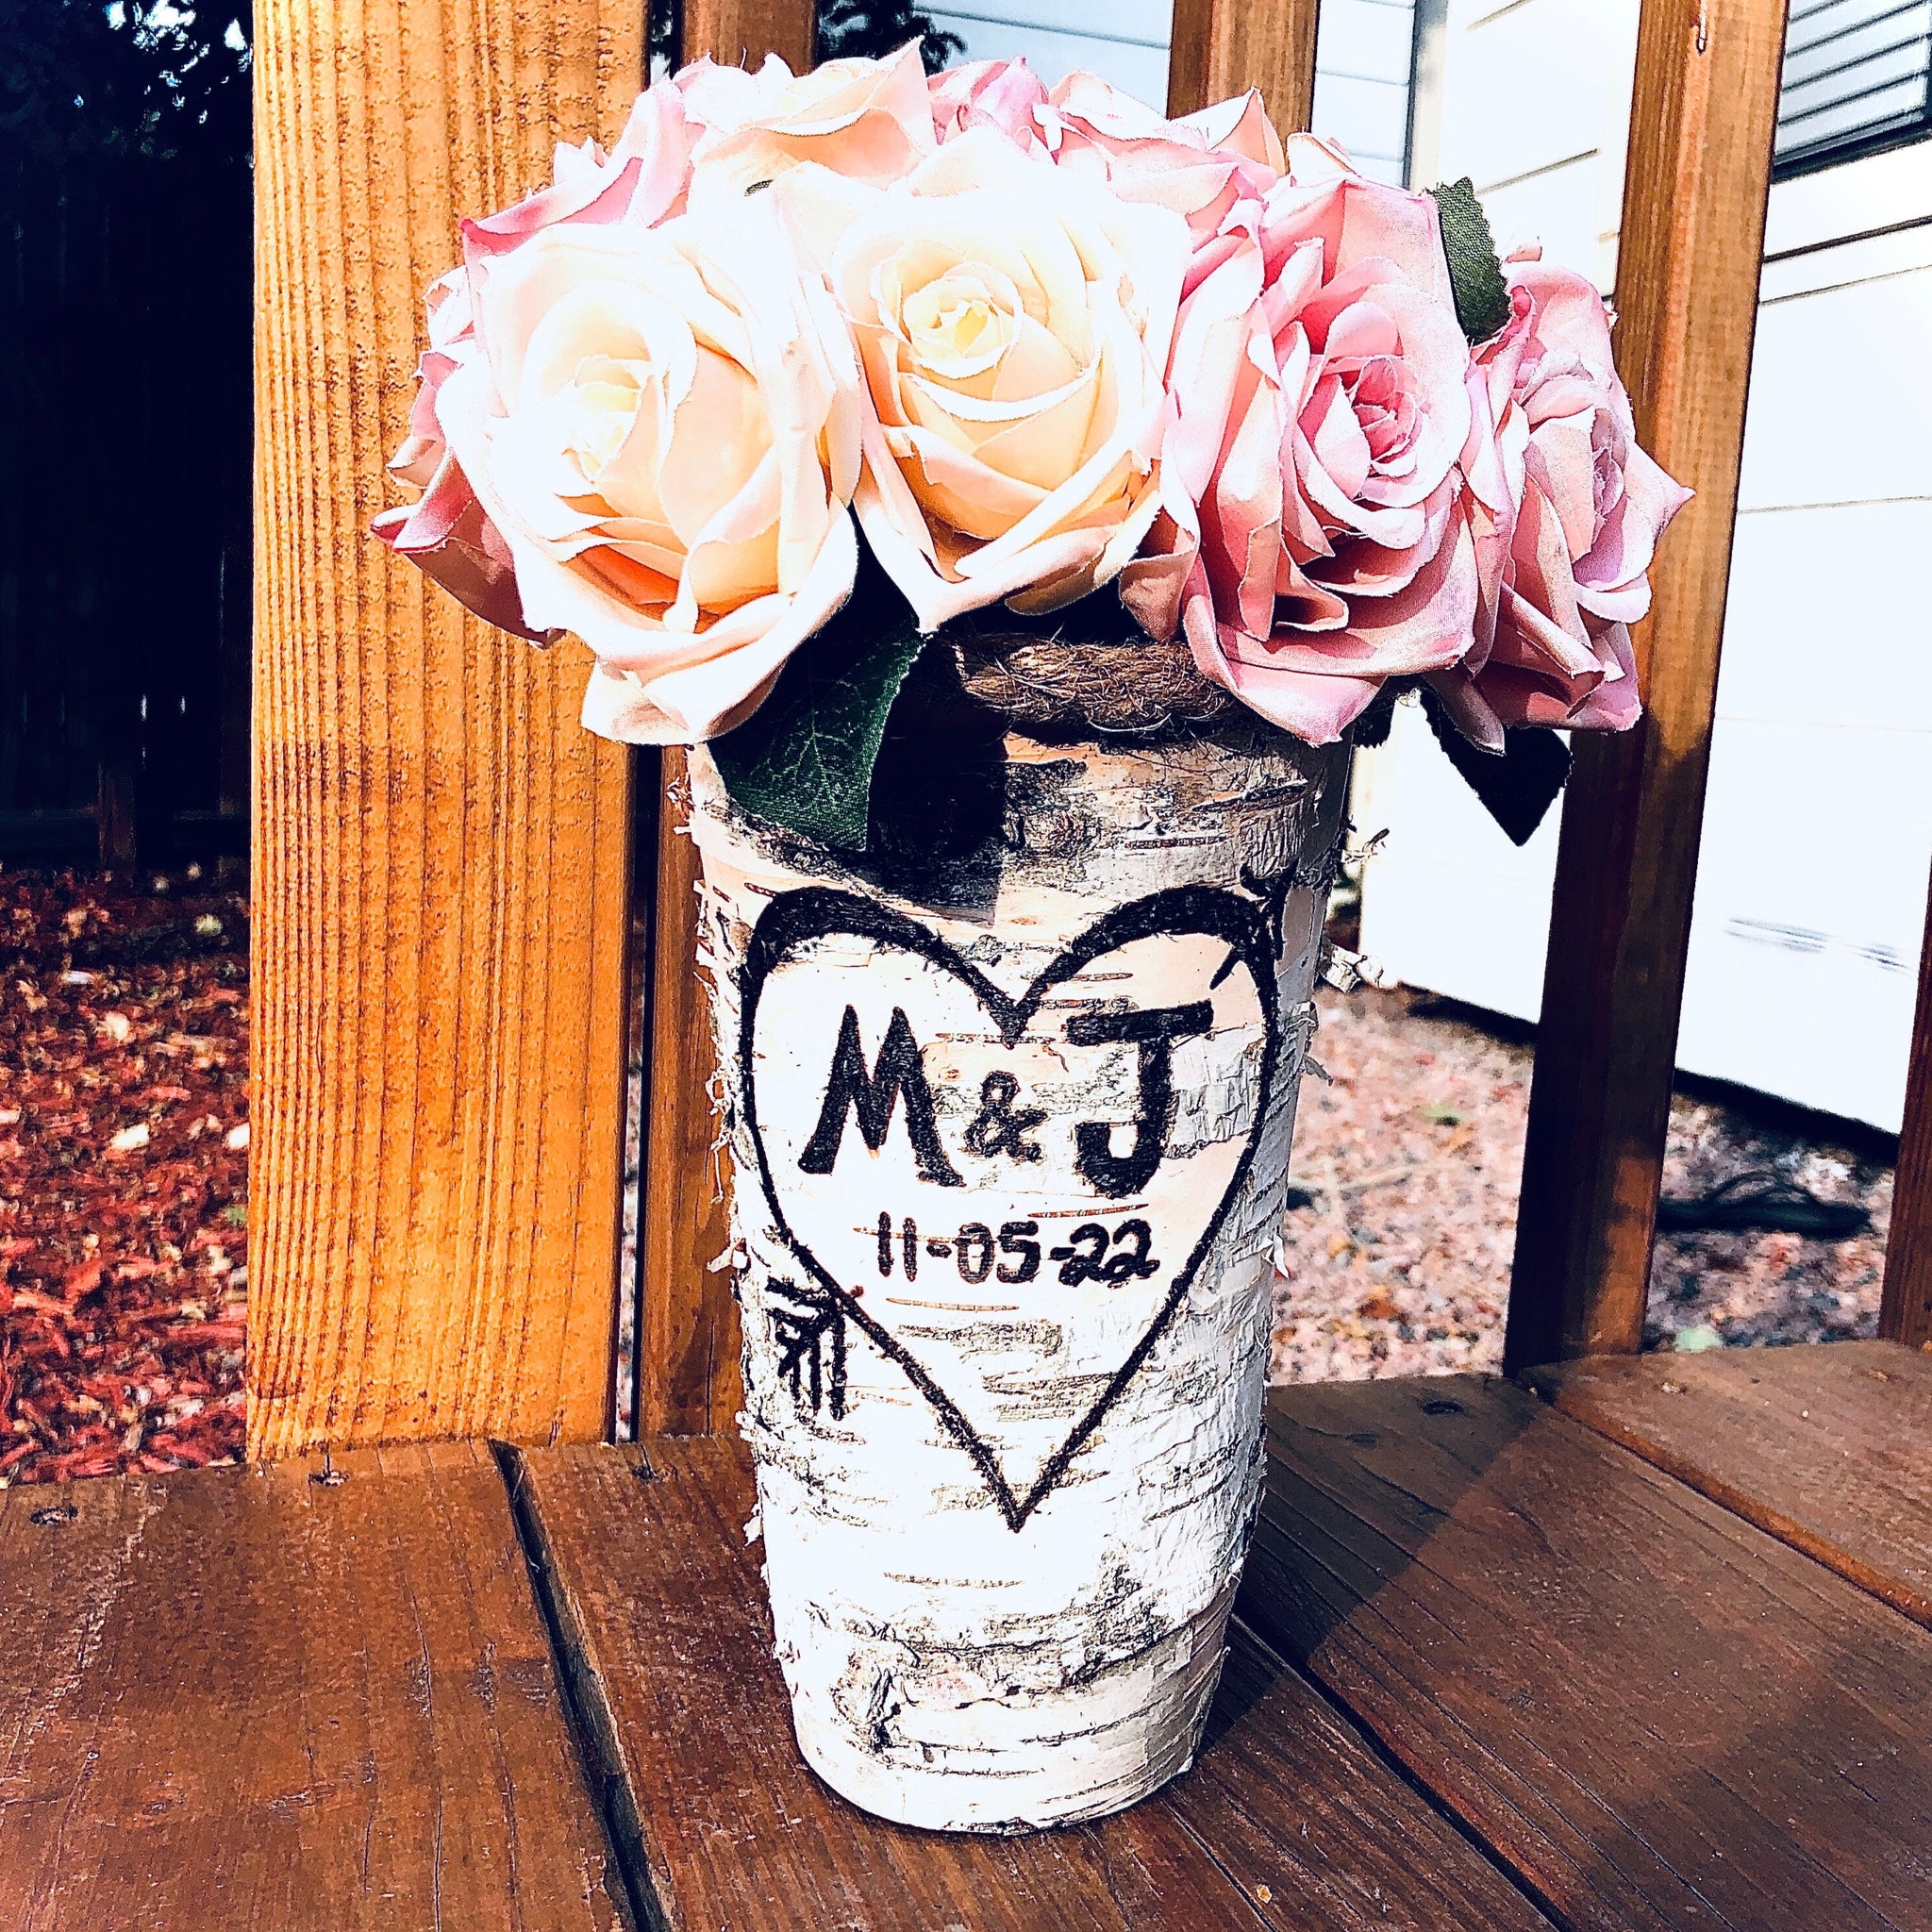 Personalized Vase- Great Wedding Gift